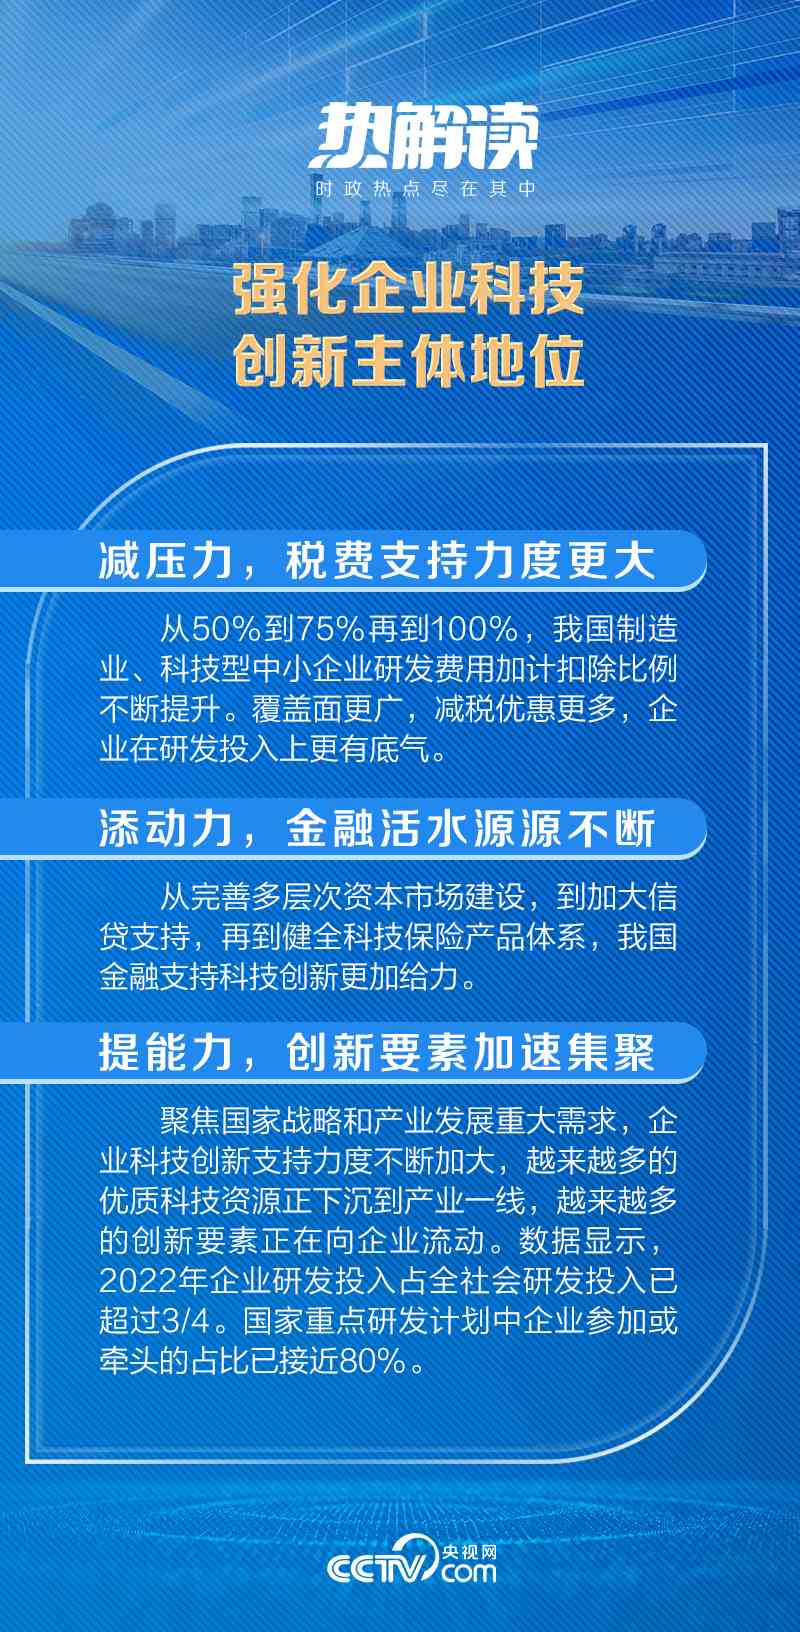 Hot interpretation | General Secretary's visit to Jiangsu emphasizes taking this "necessary path" product | Innovation | General Secretary